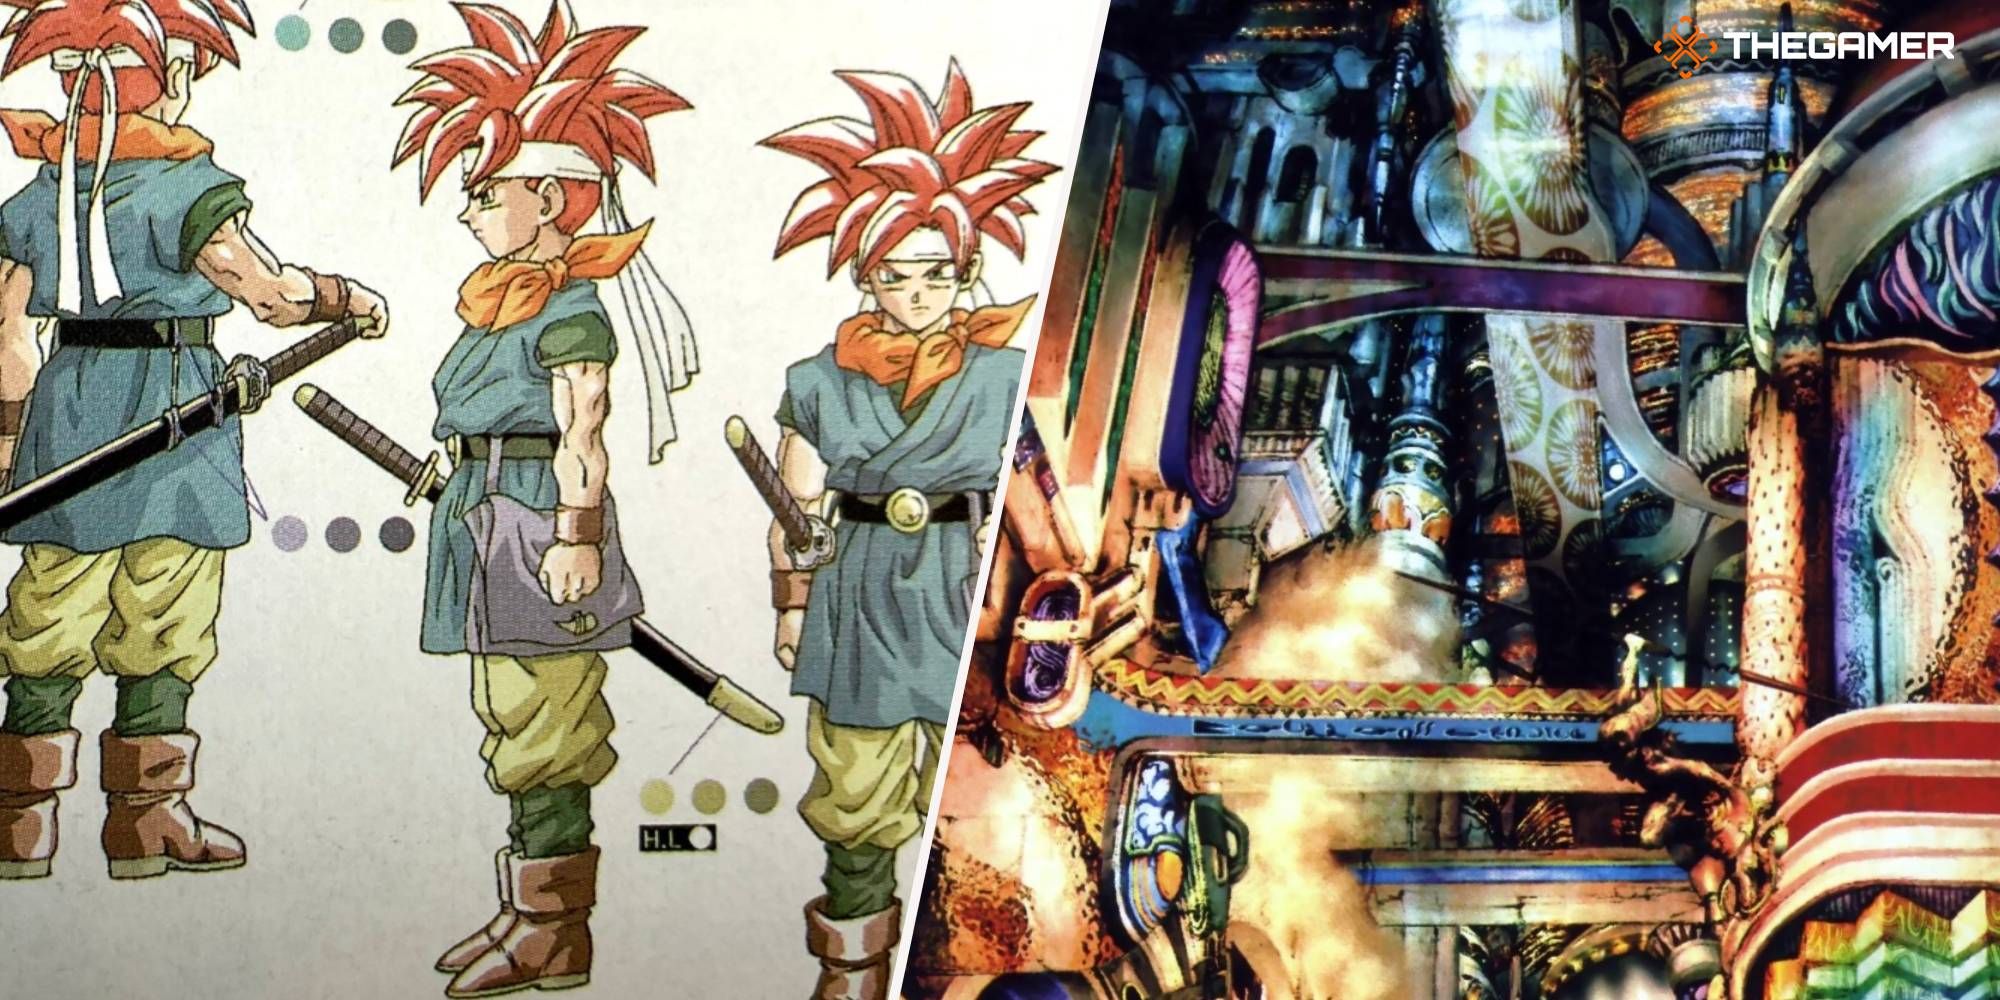 Chrono Trigger concept art of protagonist Crono, alongside concept art of Final Fantasy X.